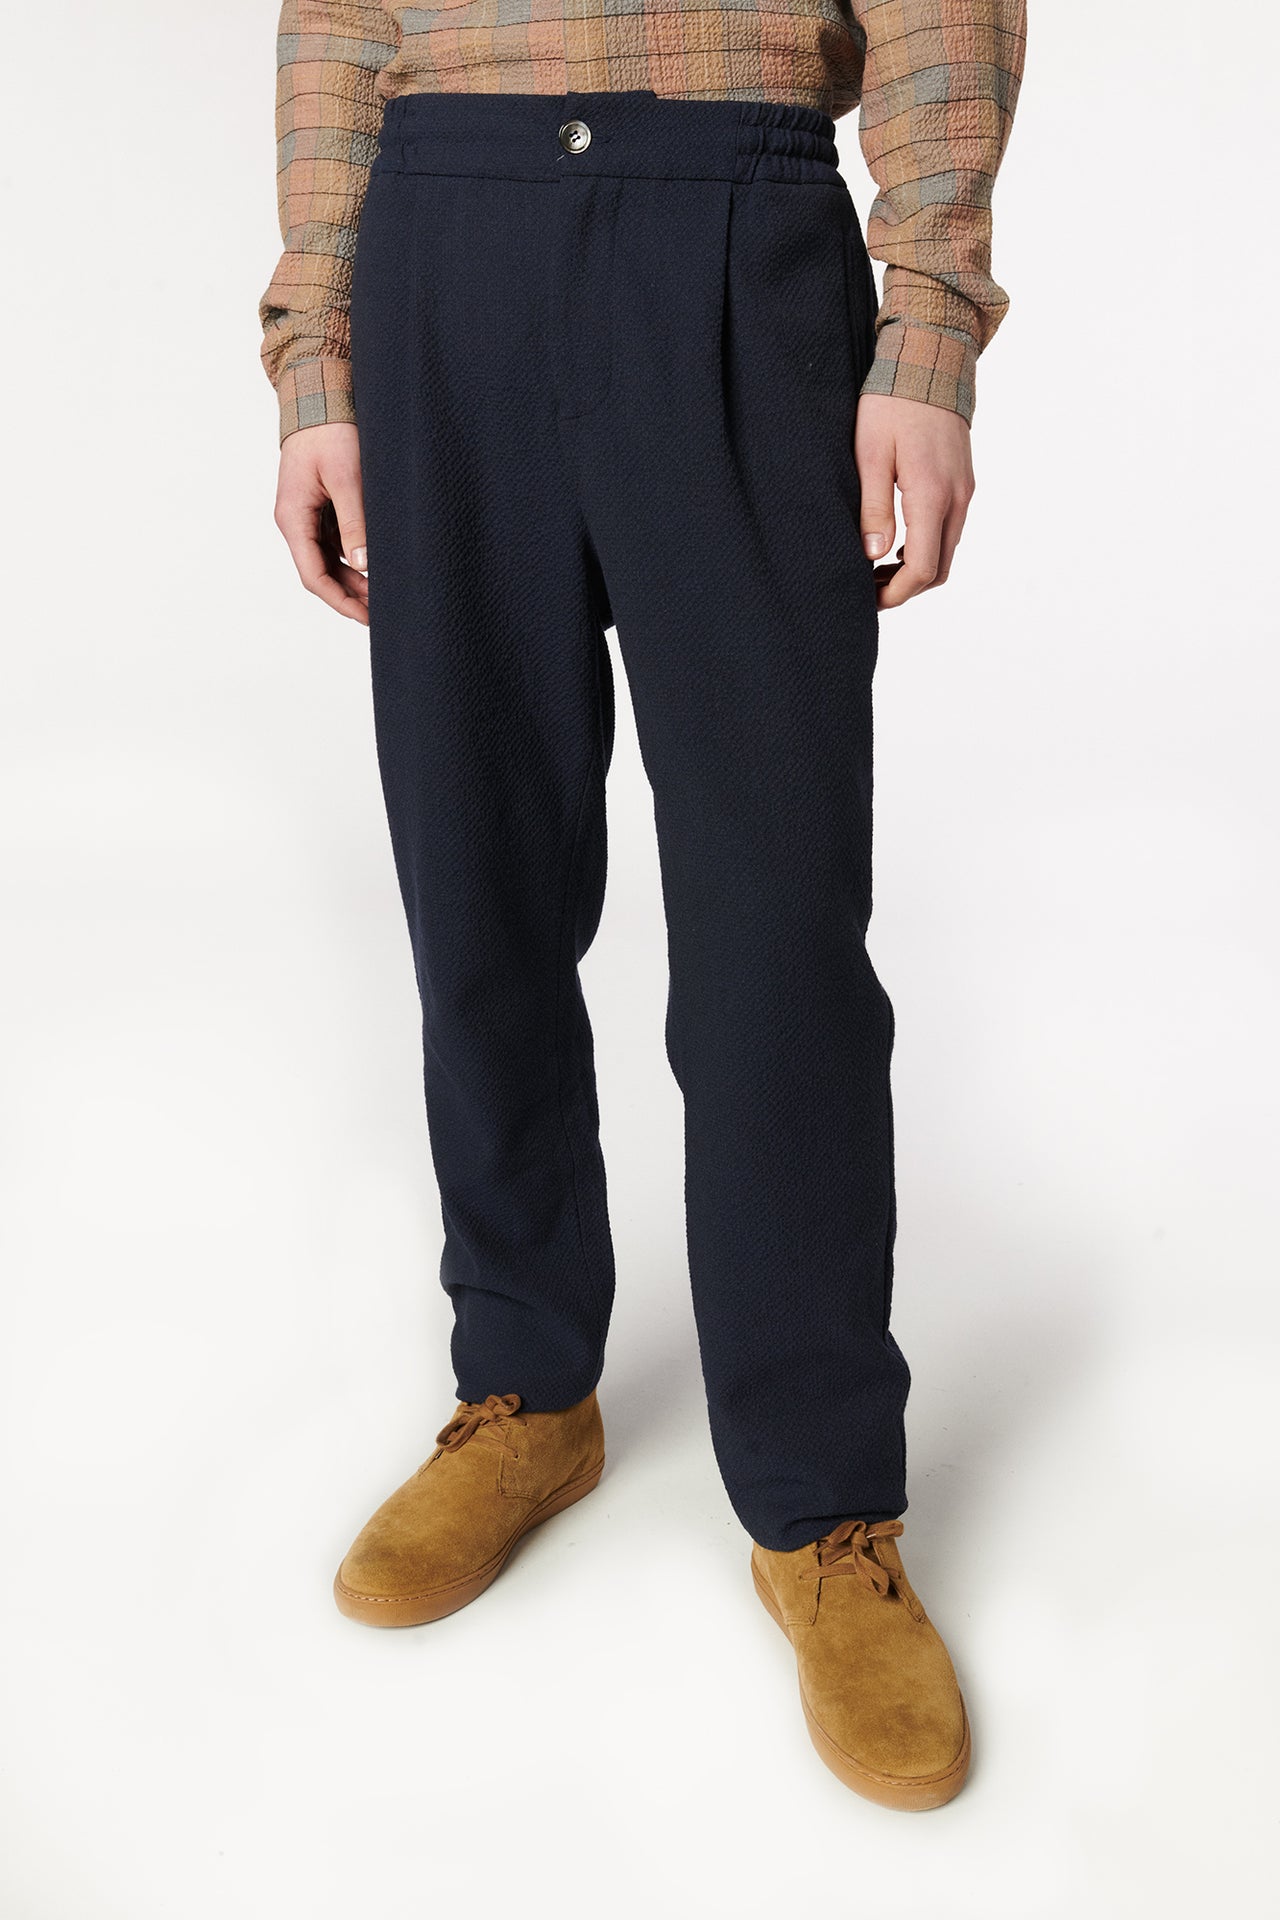 New Garden Trousers in a Navy Blue  Italian Virgin Wool and Cotton Seersucker